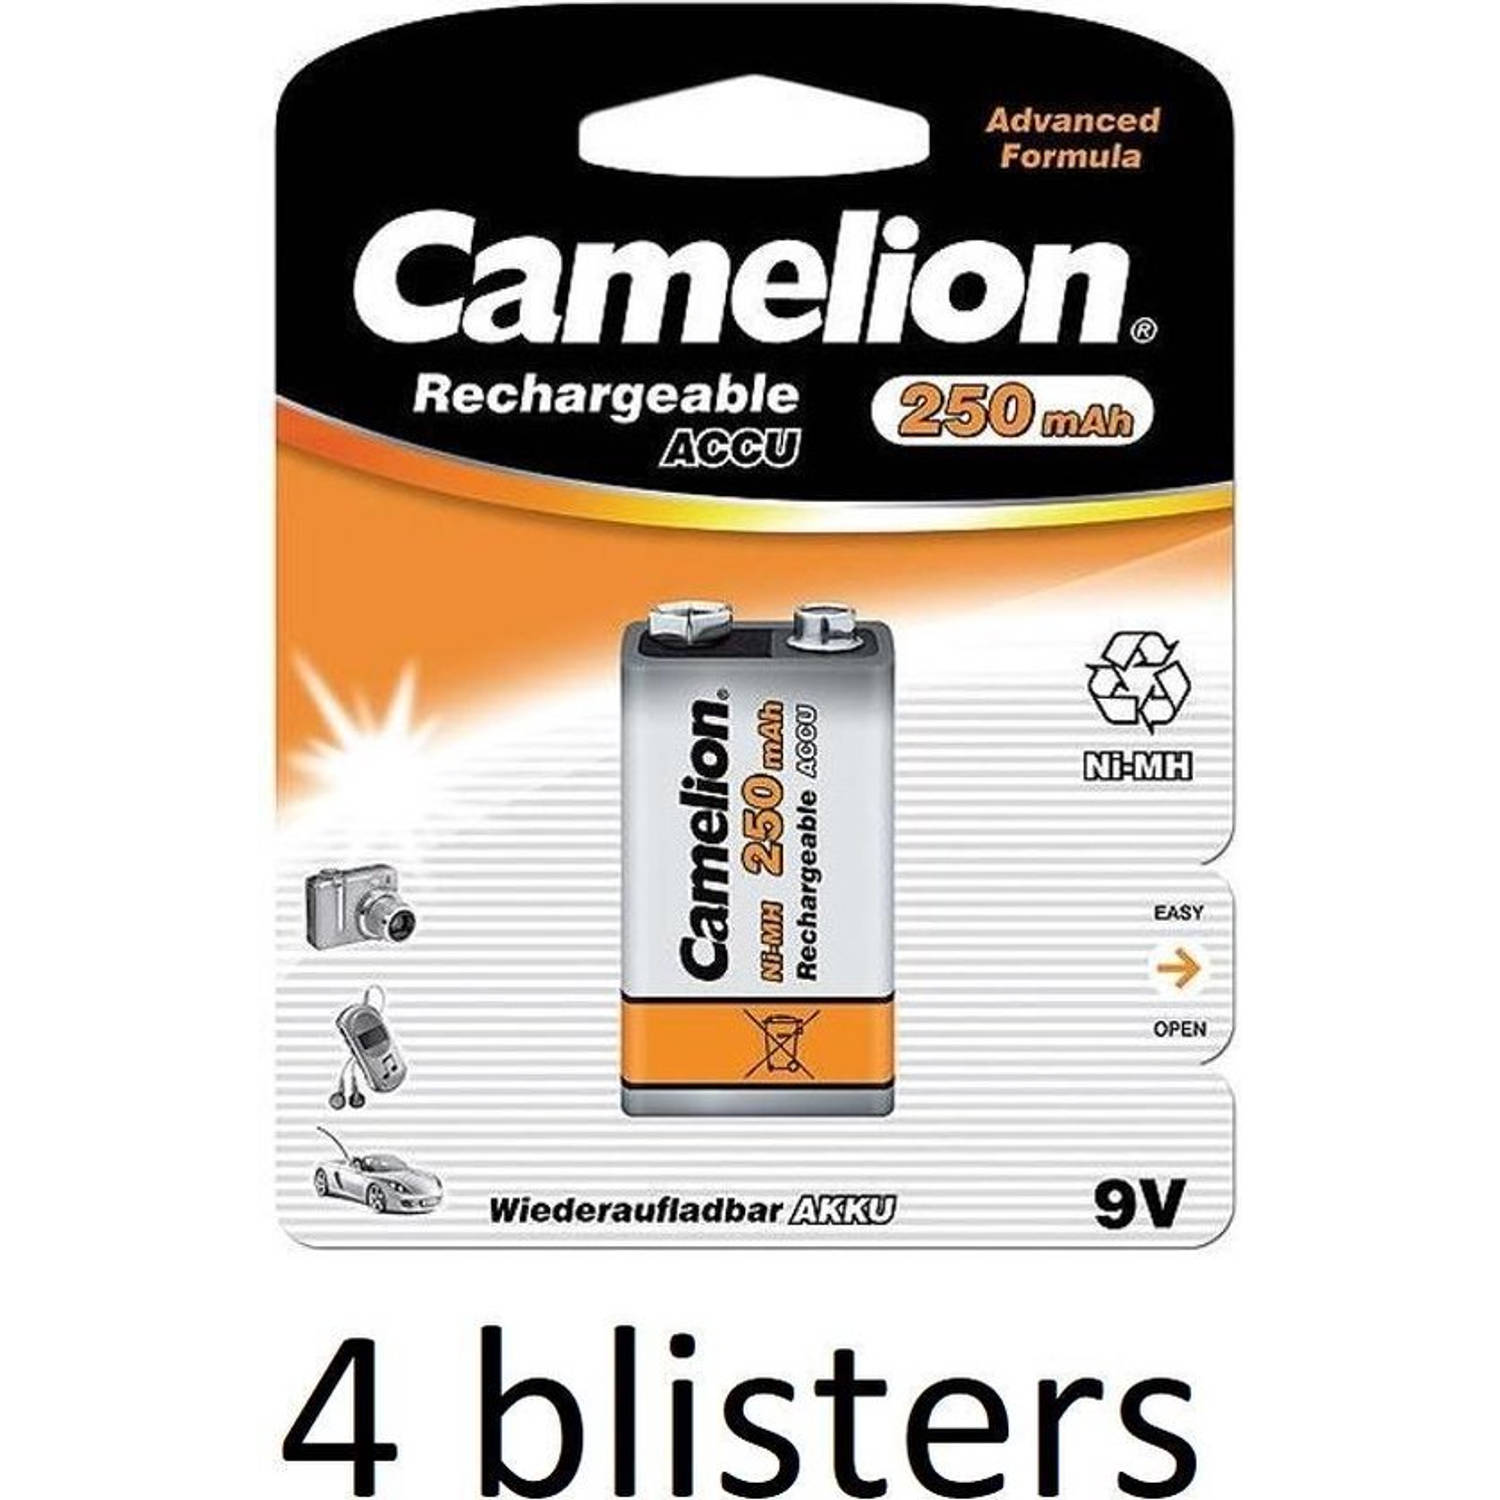 Camelion oplaadbare 9v batterij (NiMH) - 4 stuks